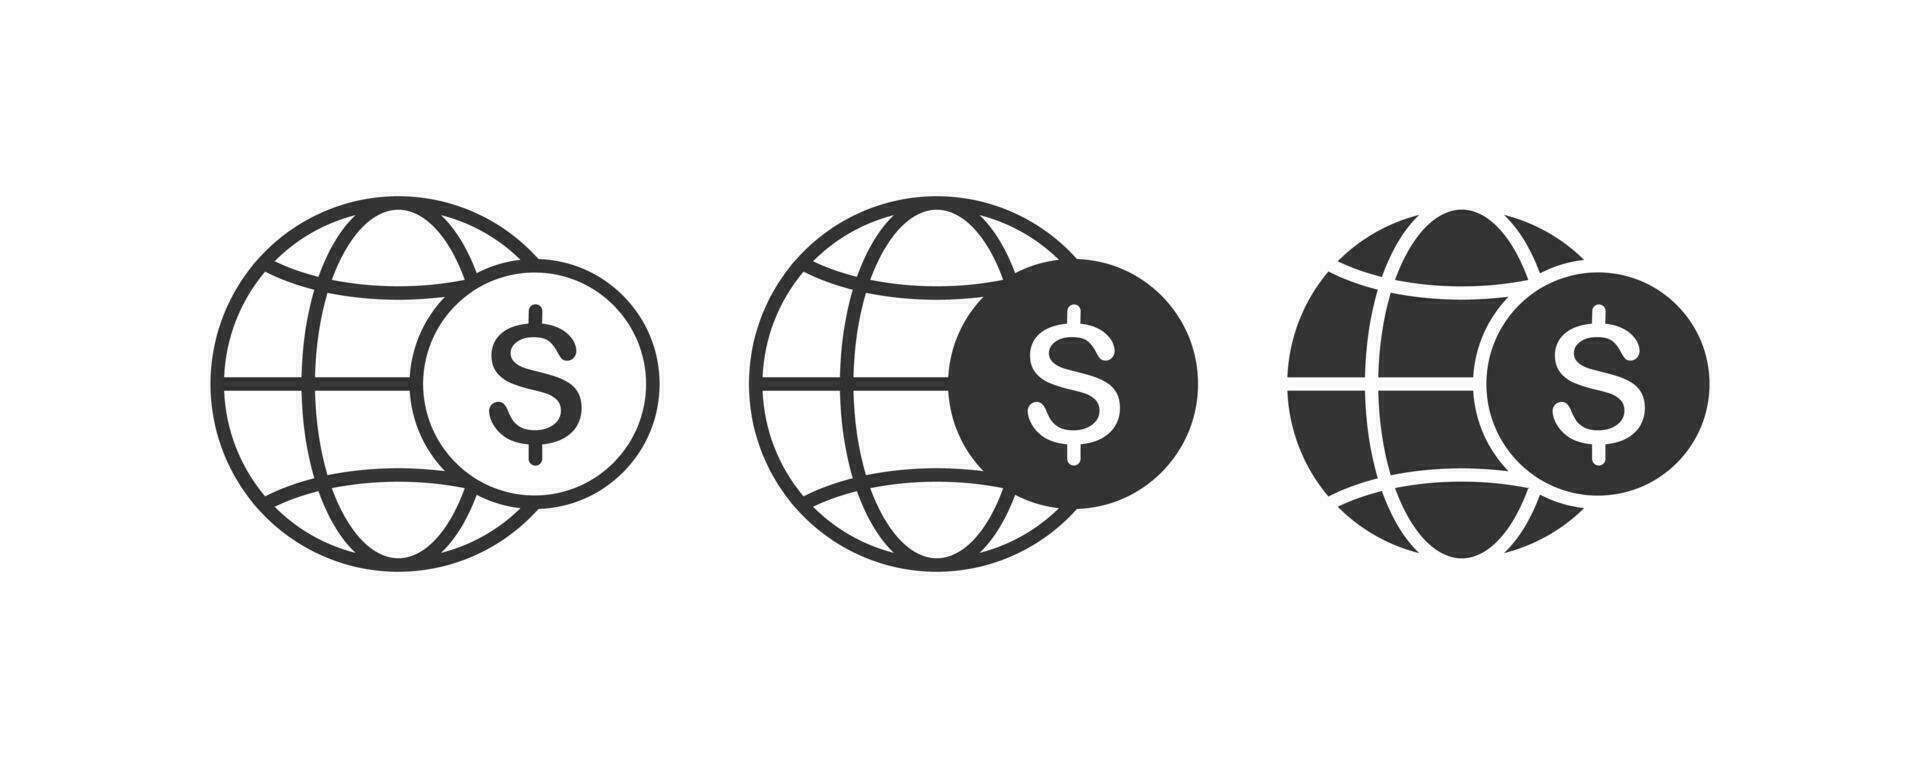 Globe and money. Global economy concept icon. Vector illustration design.Globe and money. Global economy concept icon. Vector illustration design.